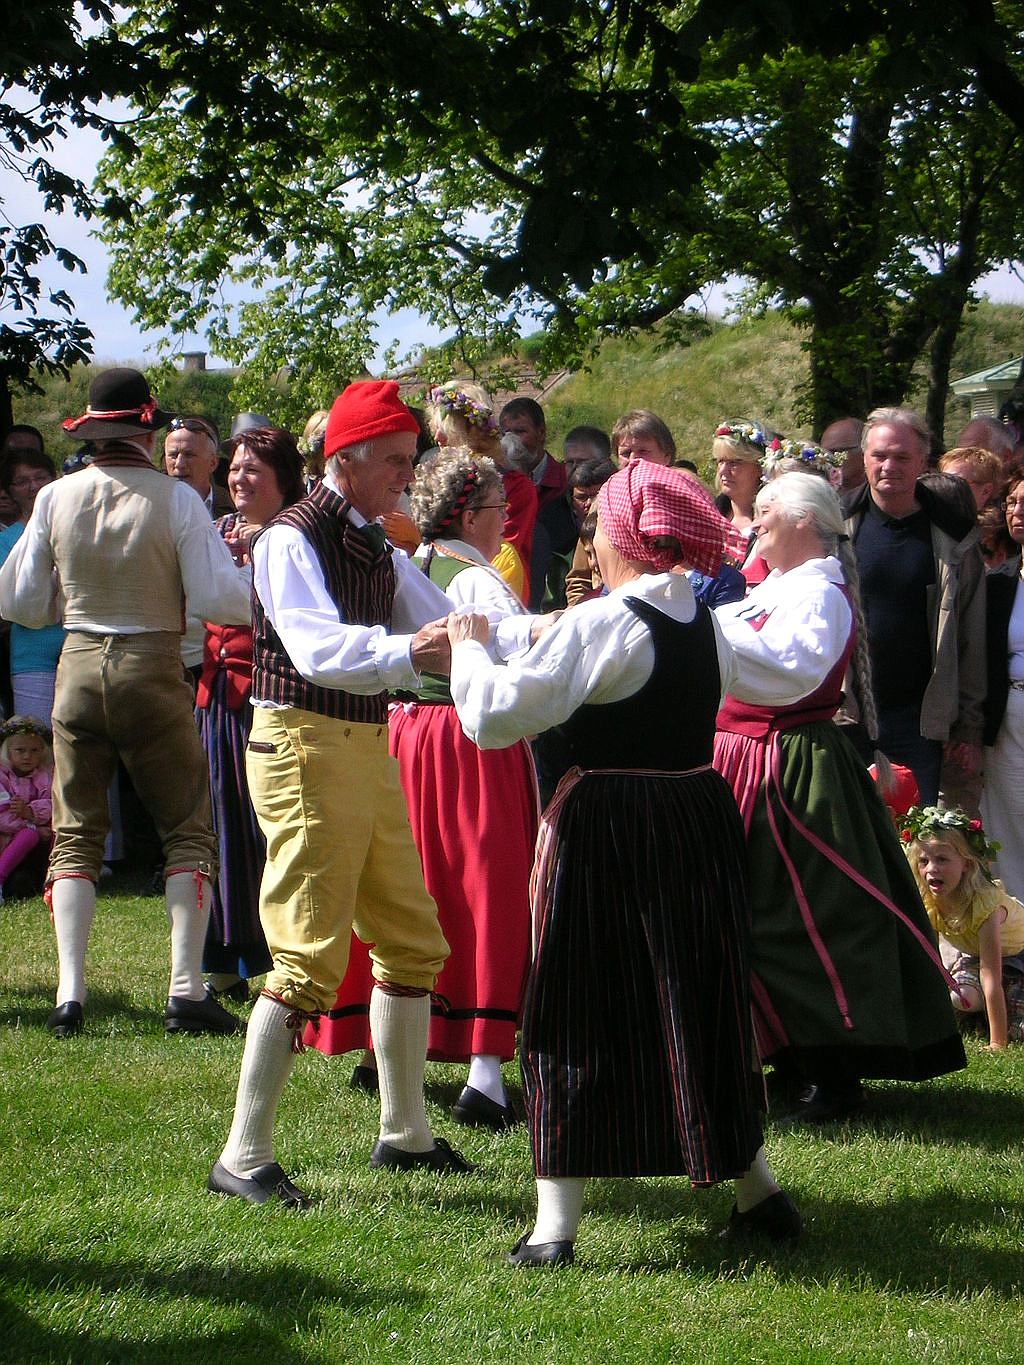 Midsommarfest is held at Saint Edward Park on June 26